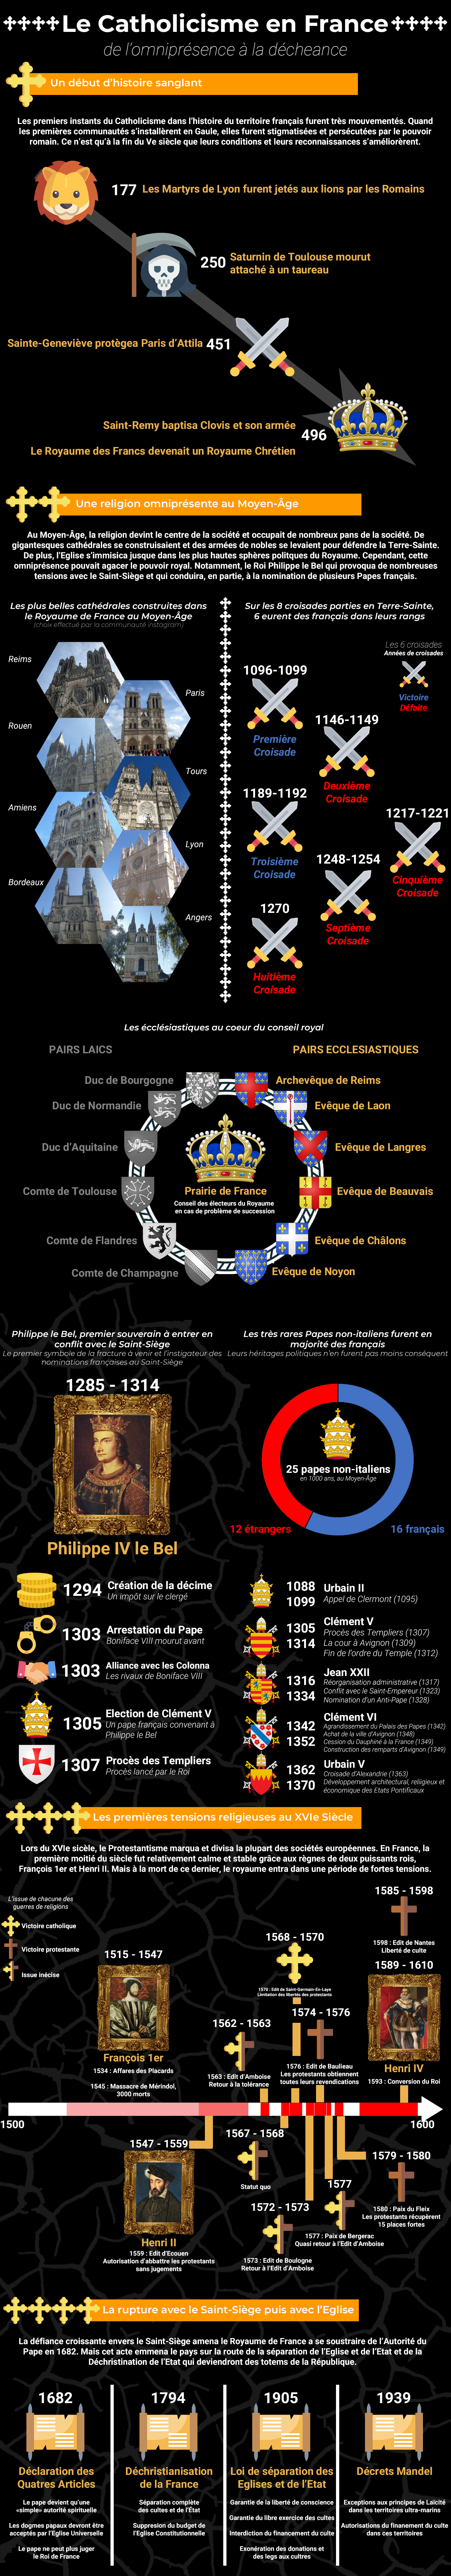 le catholicisme en france infographie